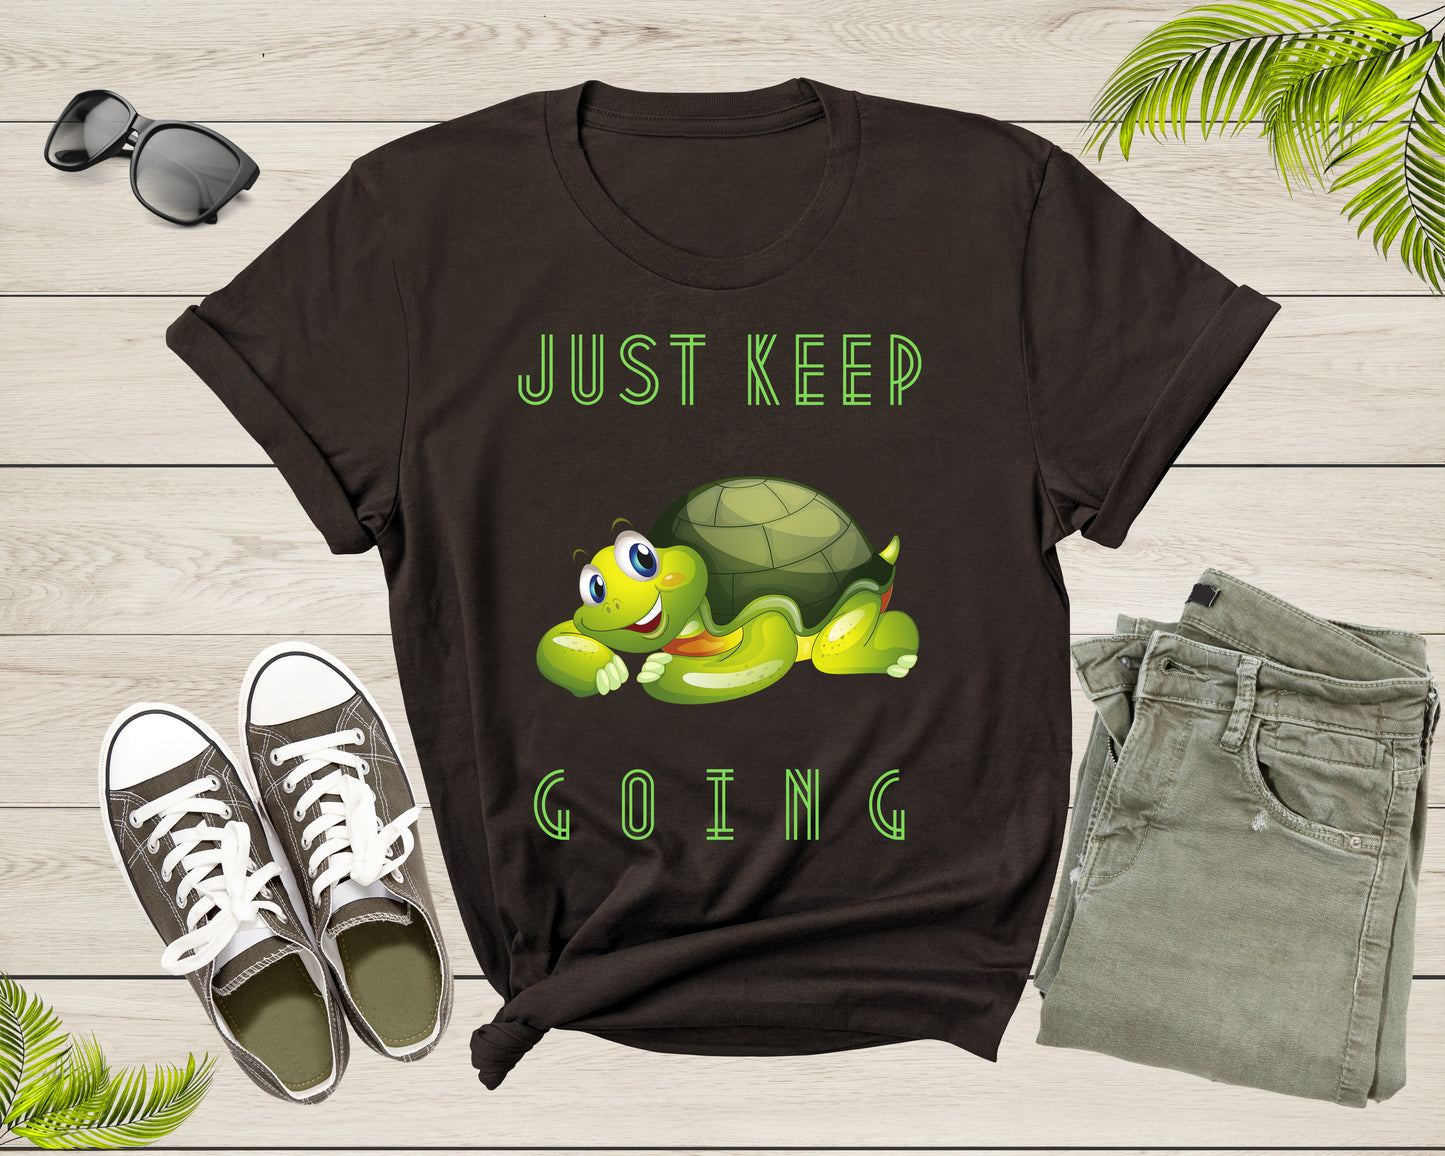 Just Keep Going Cute Turtle Tortoise Motivational Inspire T-Shirt Tortoise Quote Lover Gift T Shirt for Men Women Kids Boys Girls Tshirt